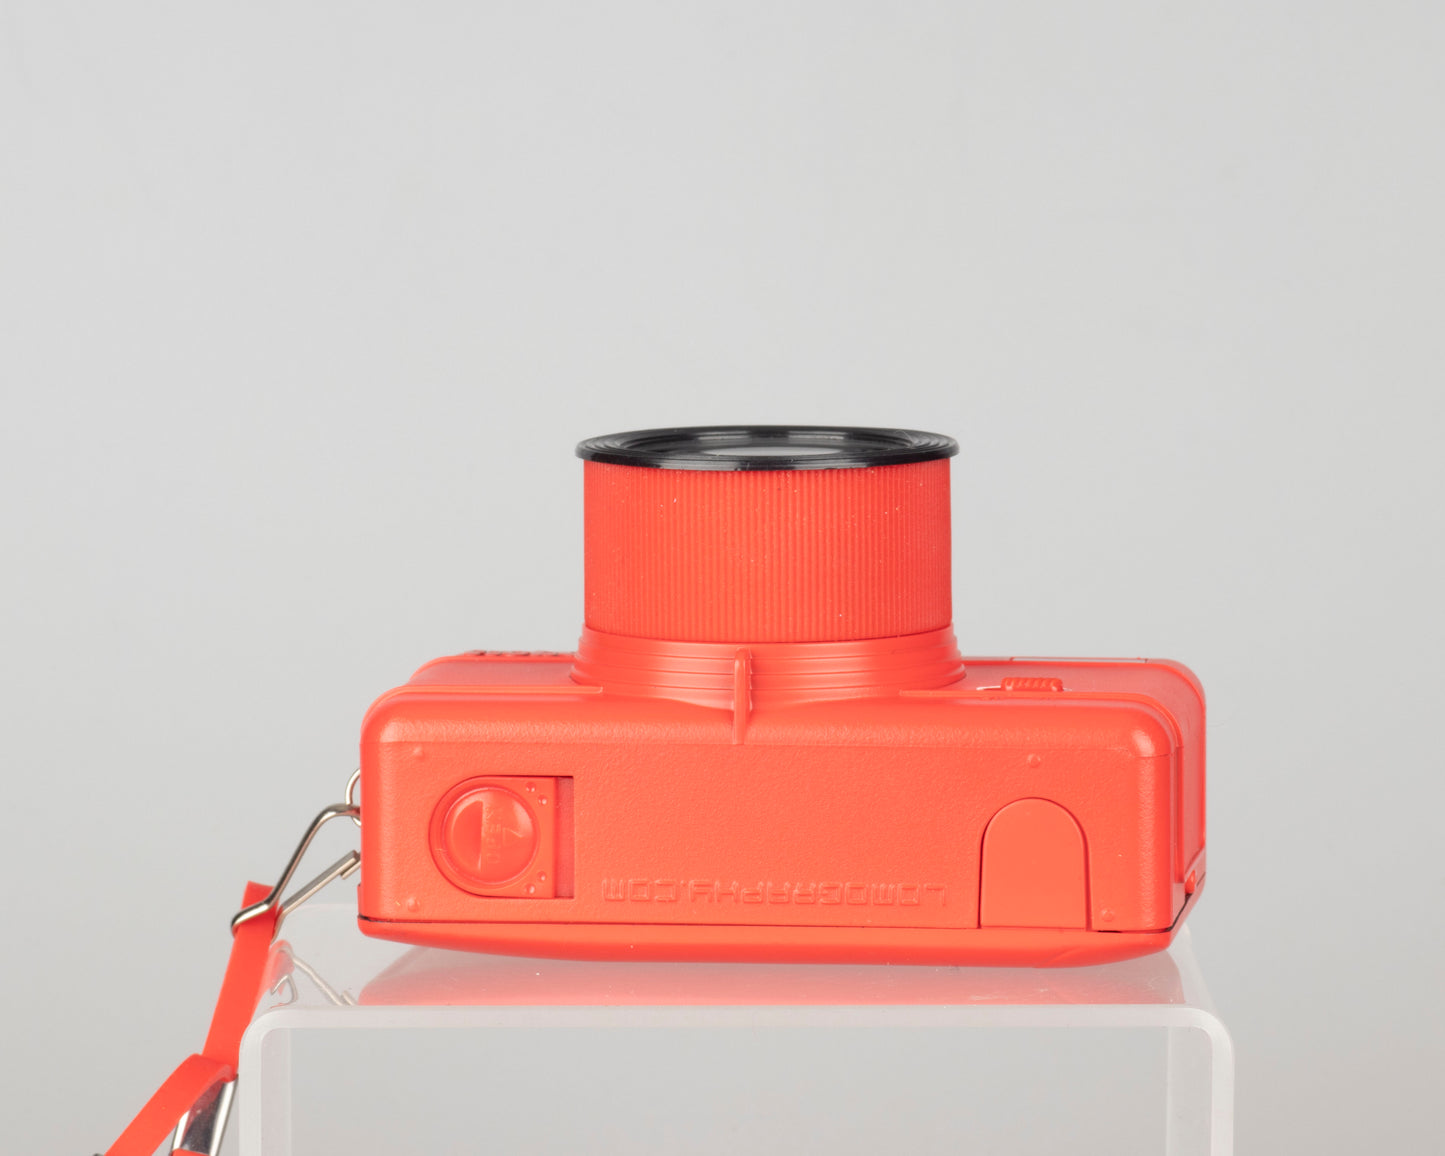 Lomography Fisheye One 35mm film camera red version (serial 0858653)